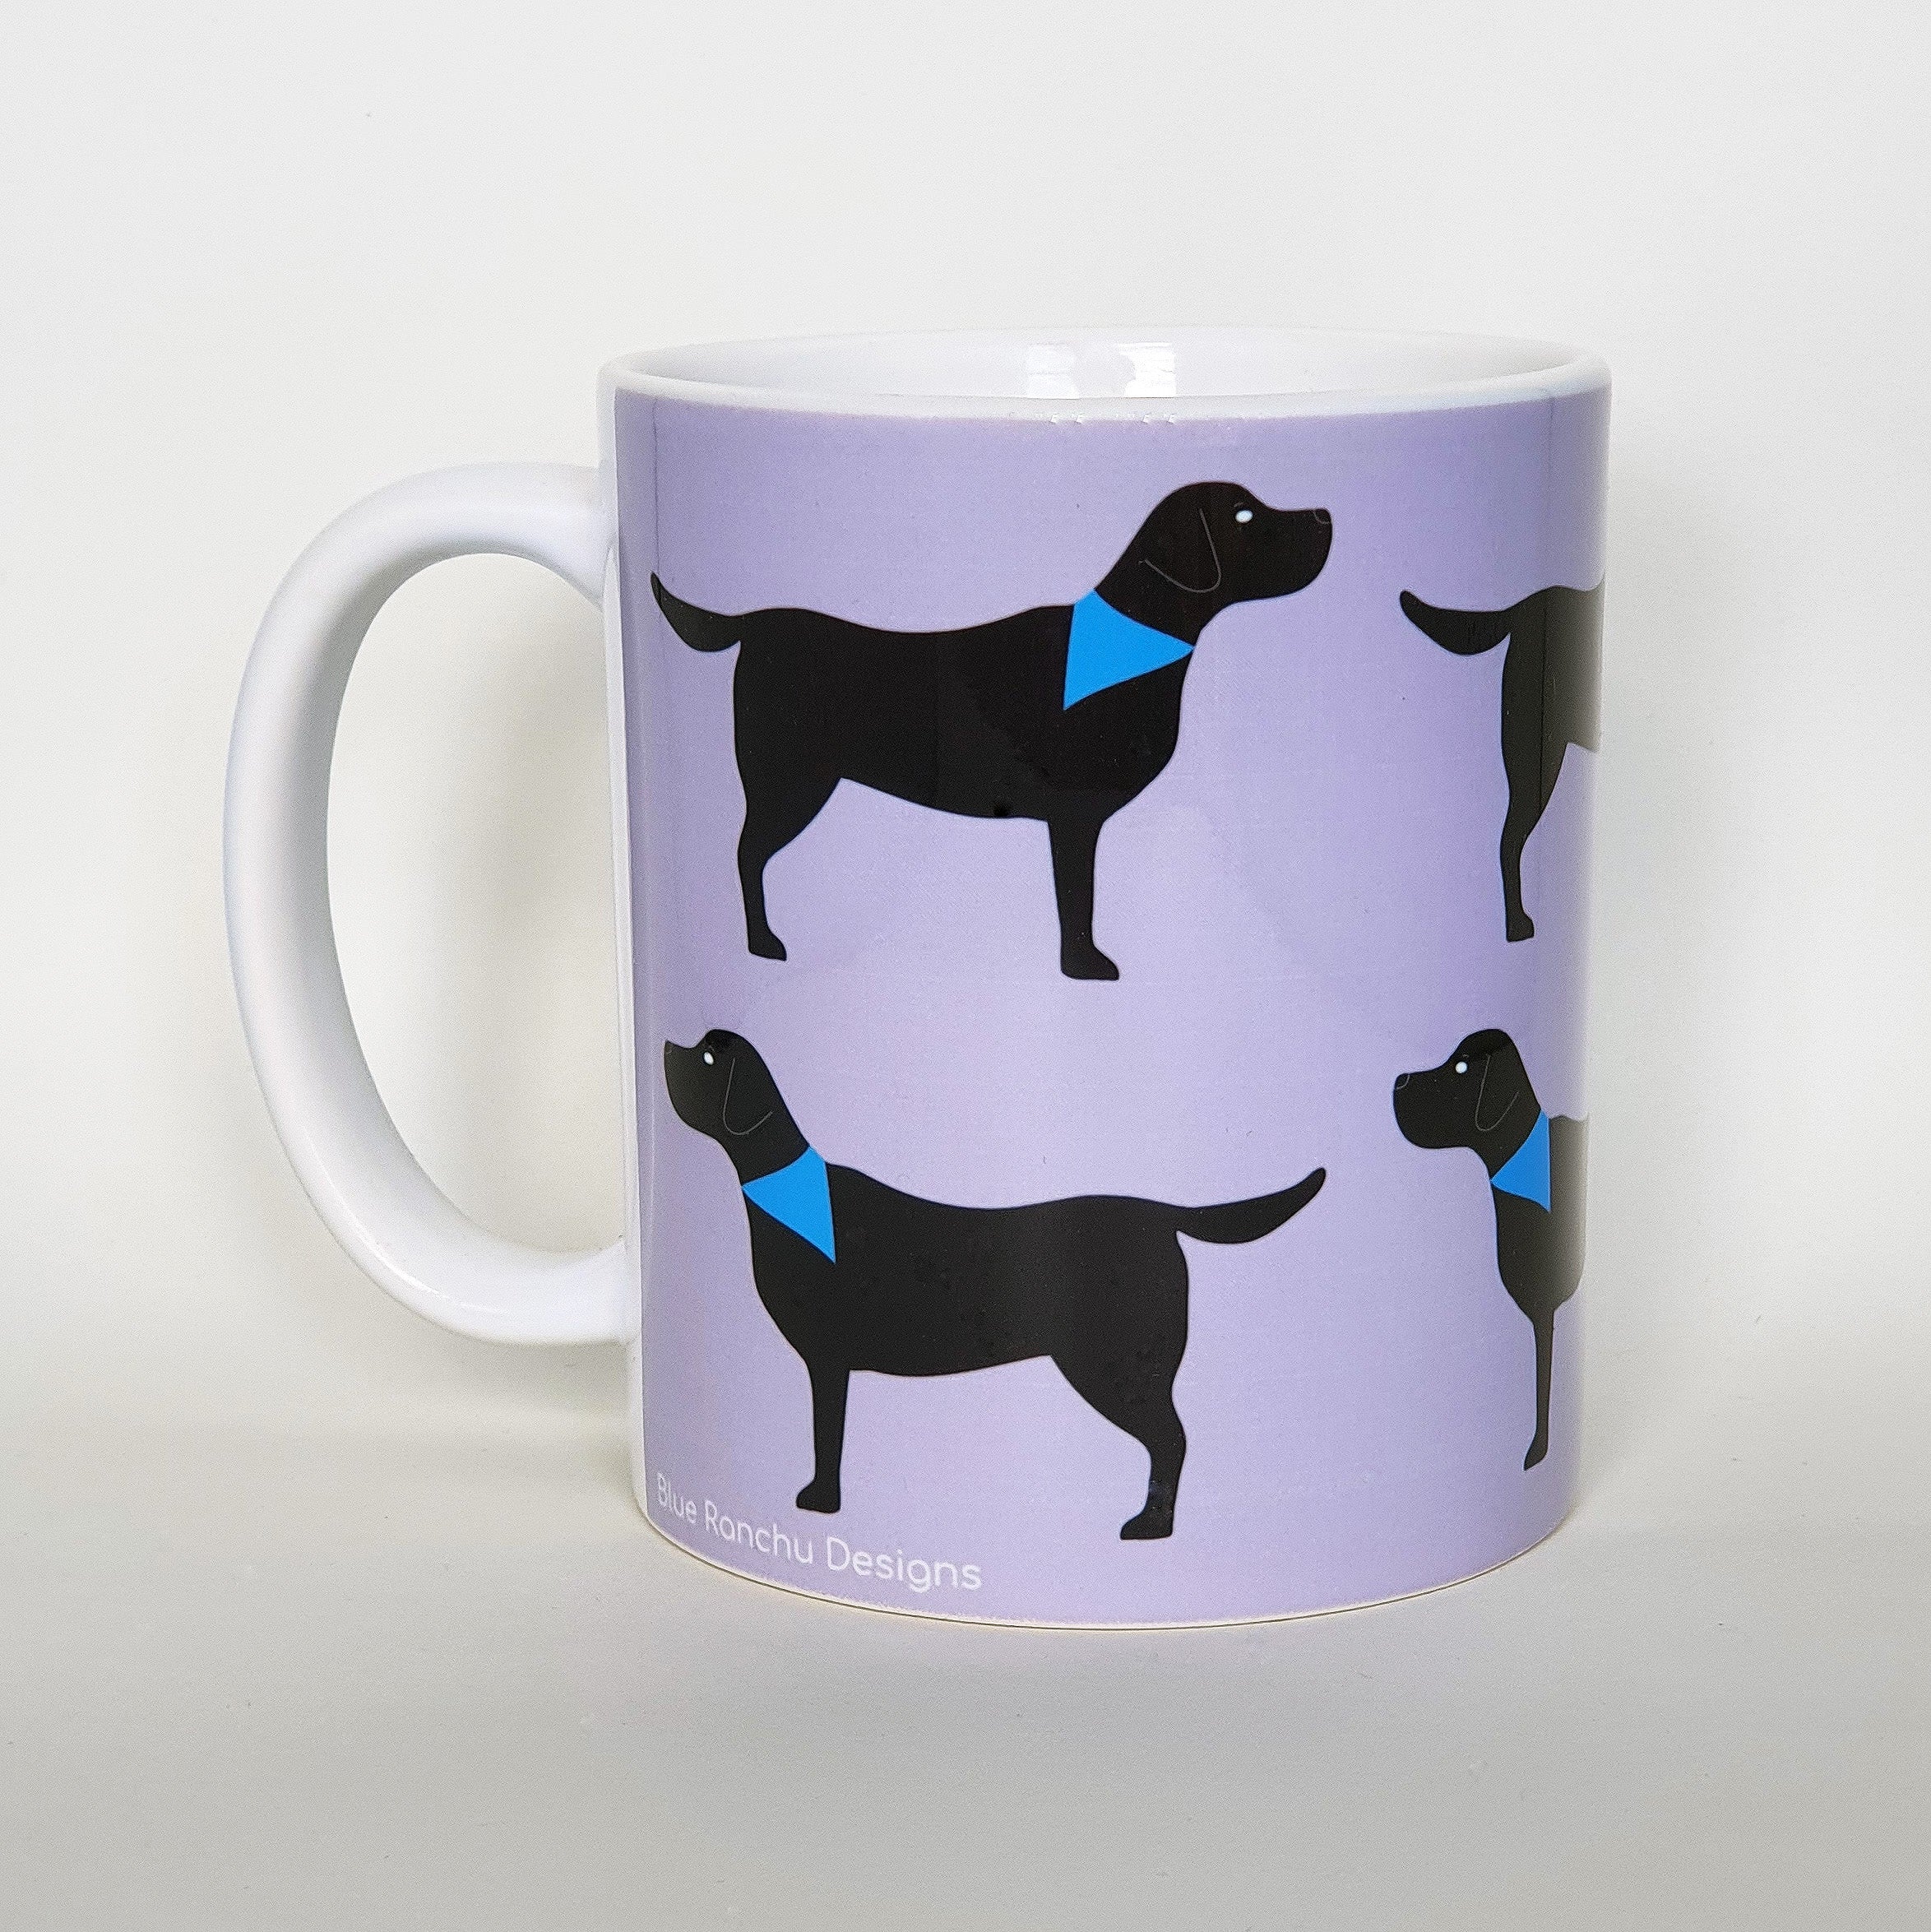 Black Labrador earthenware mug